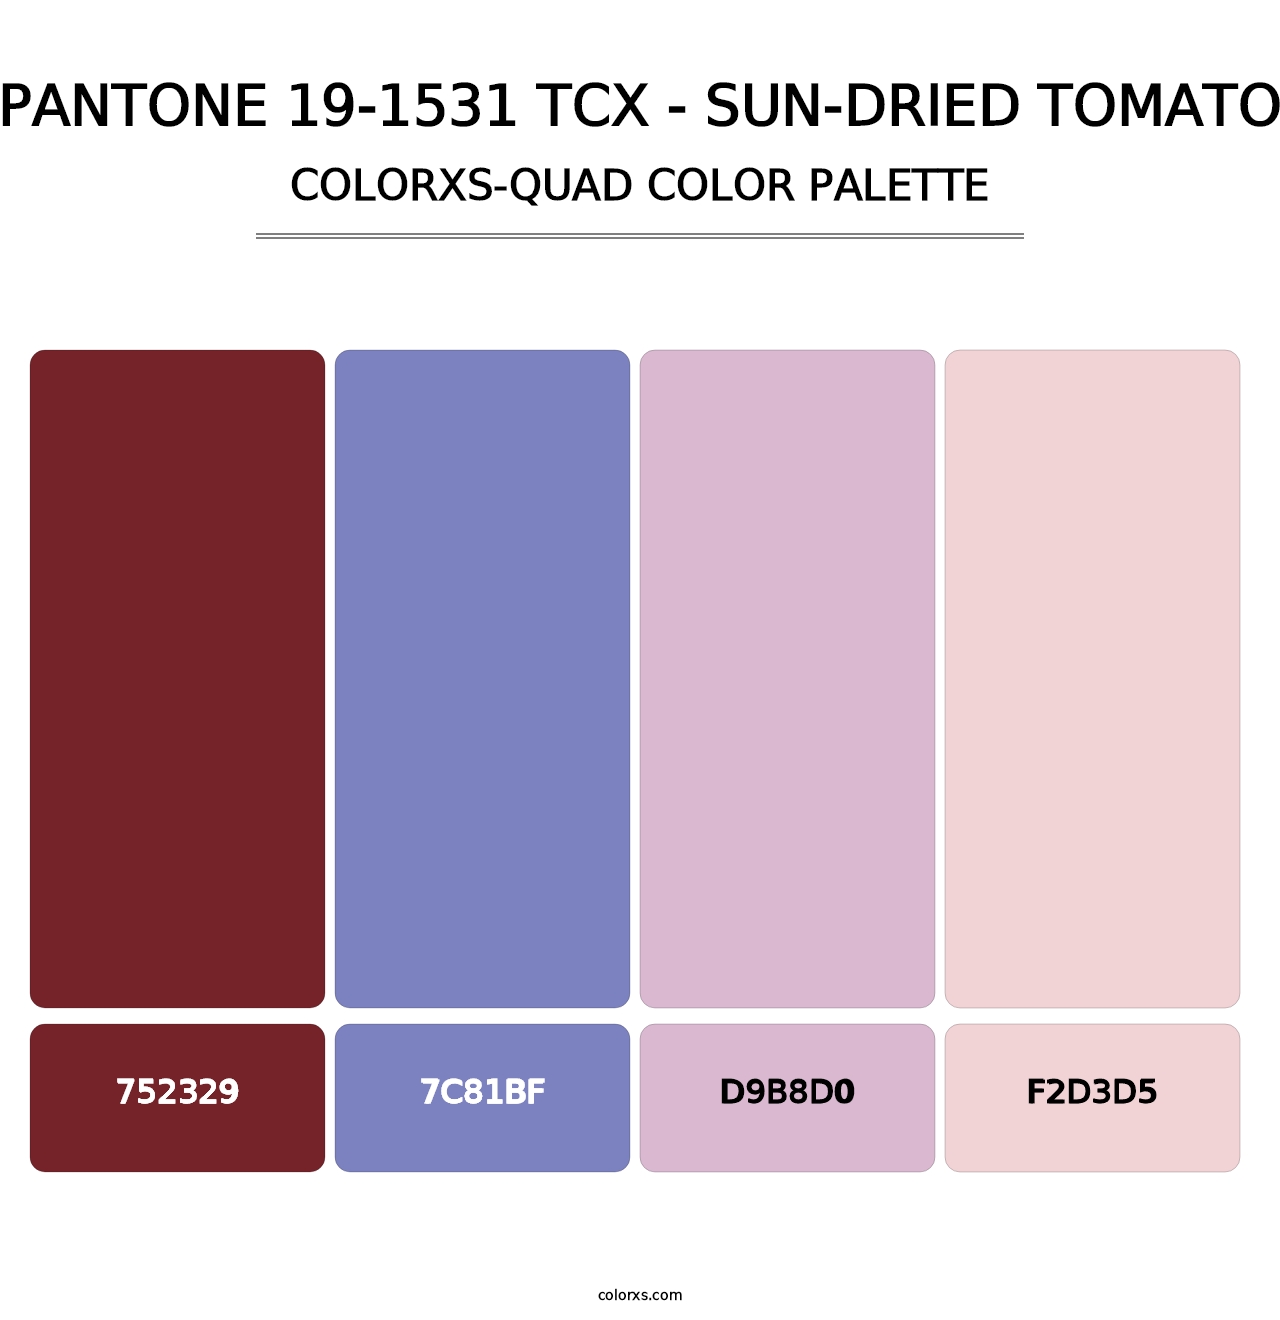 PANTONE 19-1531 TCX - Sun-Dried Tomato - Colorxs Quad Palette